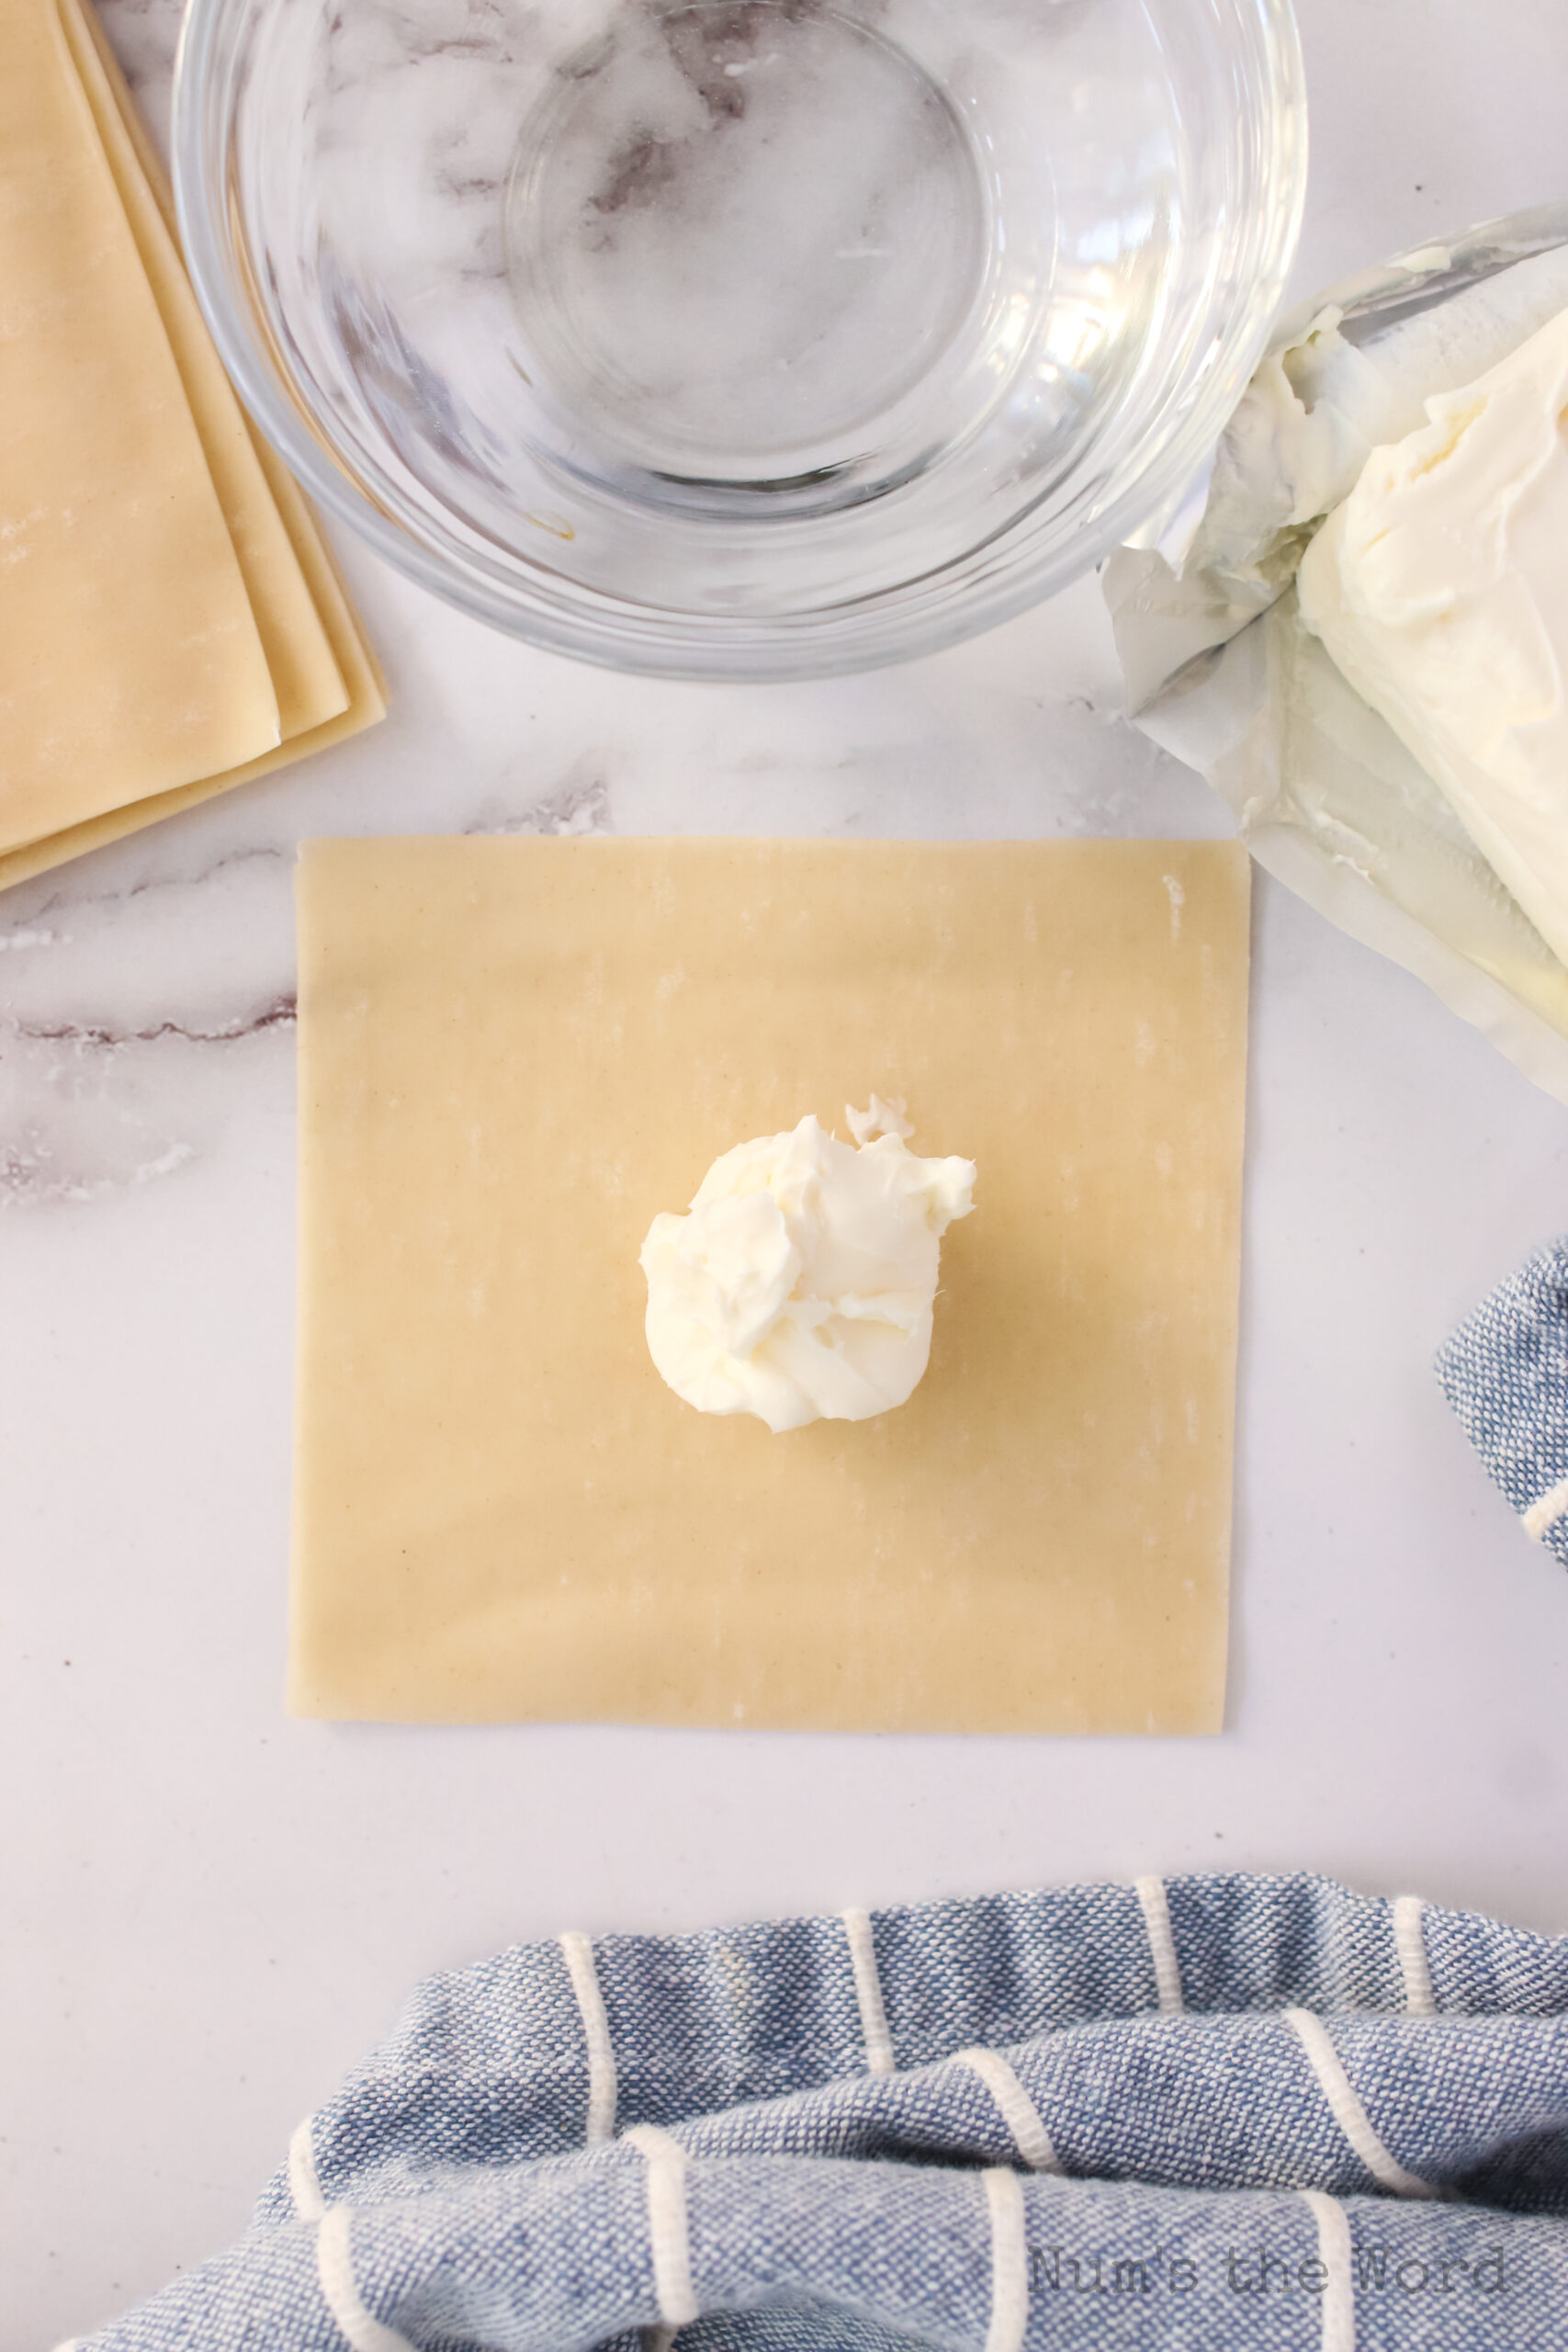 cream cheese dollop on a wonton wrapper